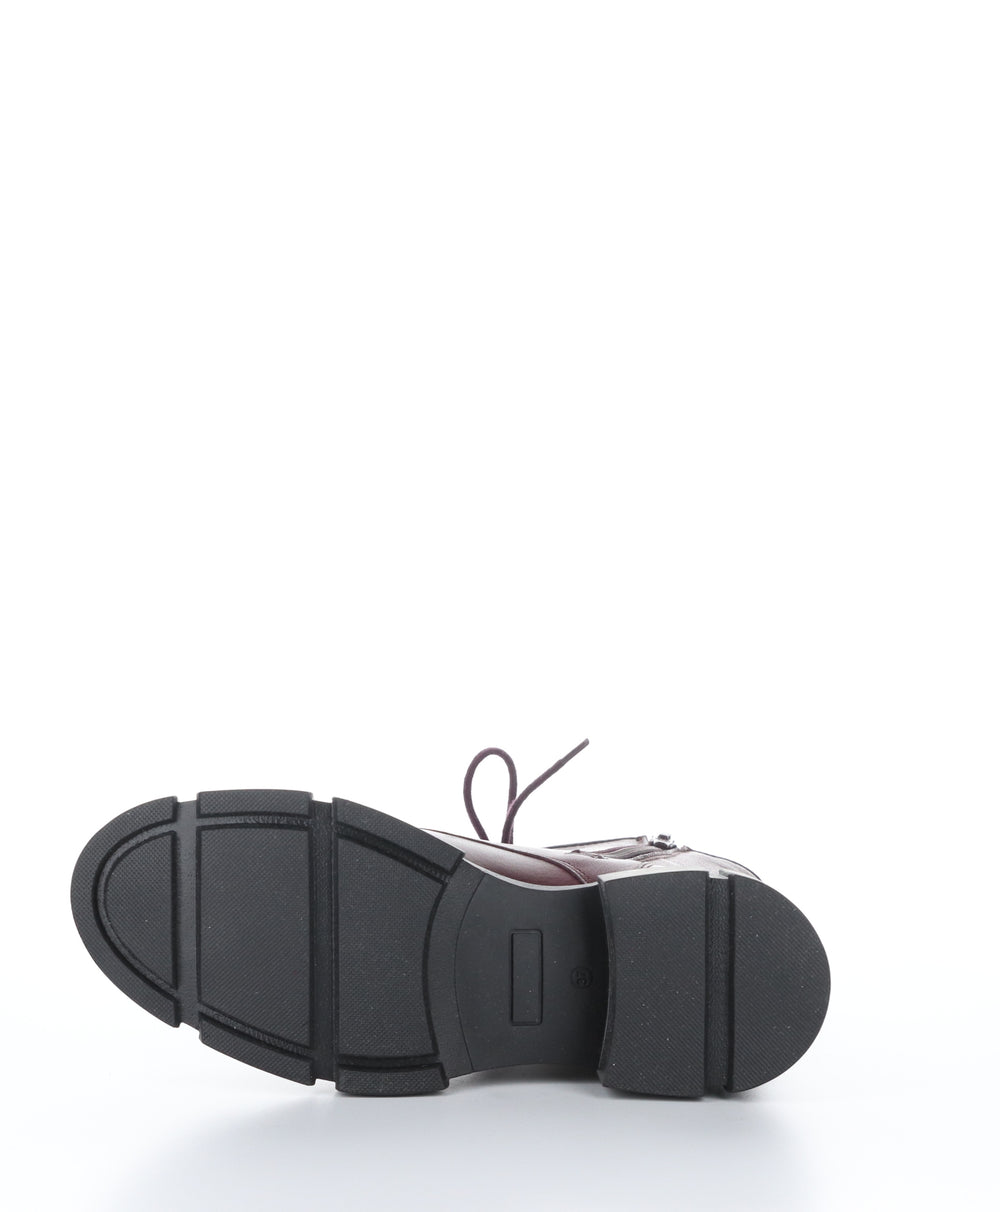 LUCK Bordo Zip Up Boots|LUCK Bottes avec Fermeture Zippée in Rouge